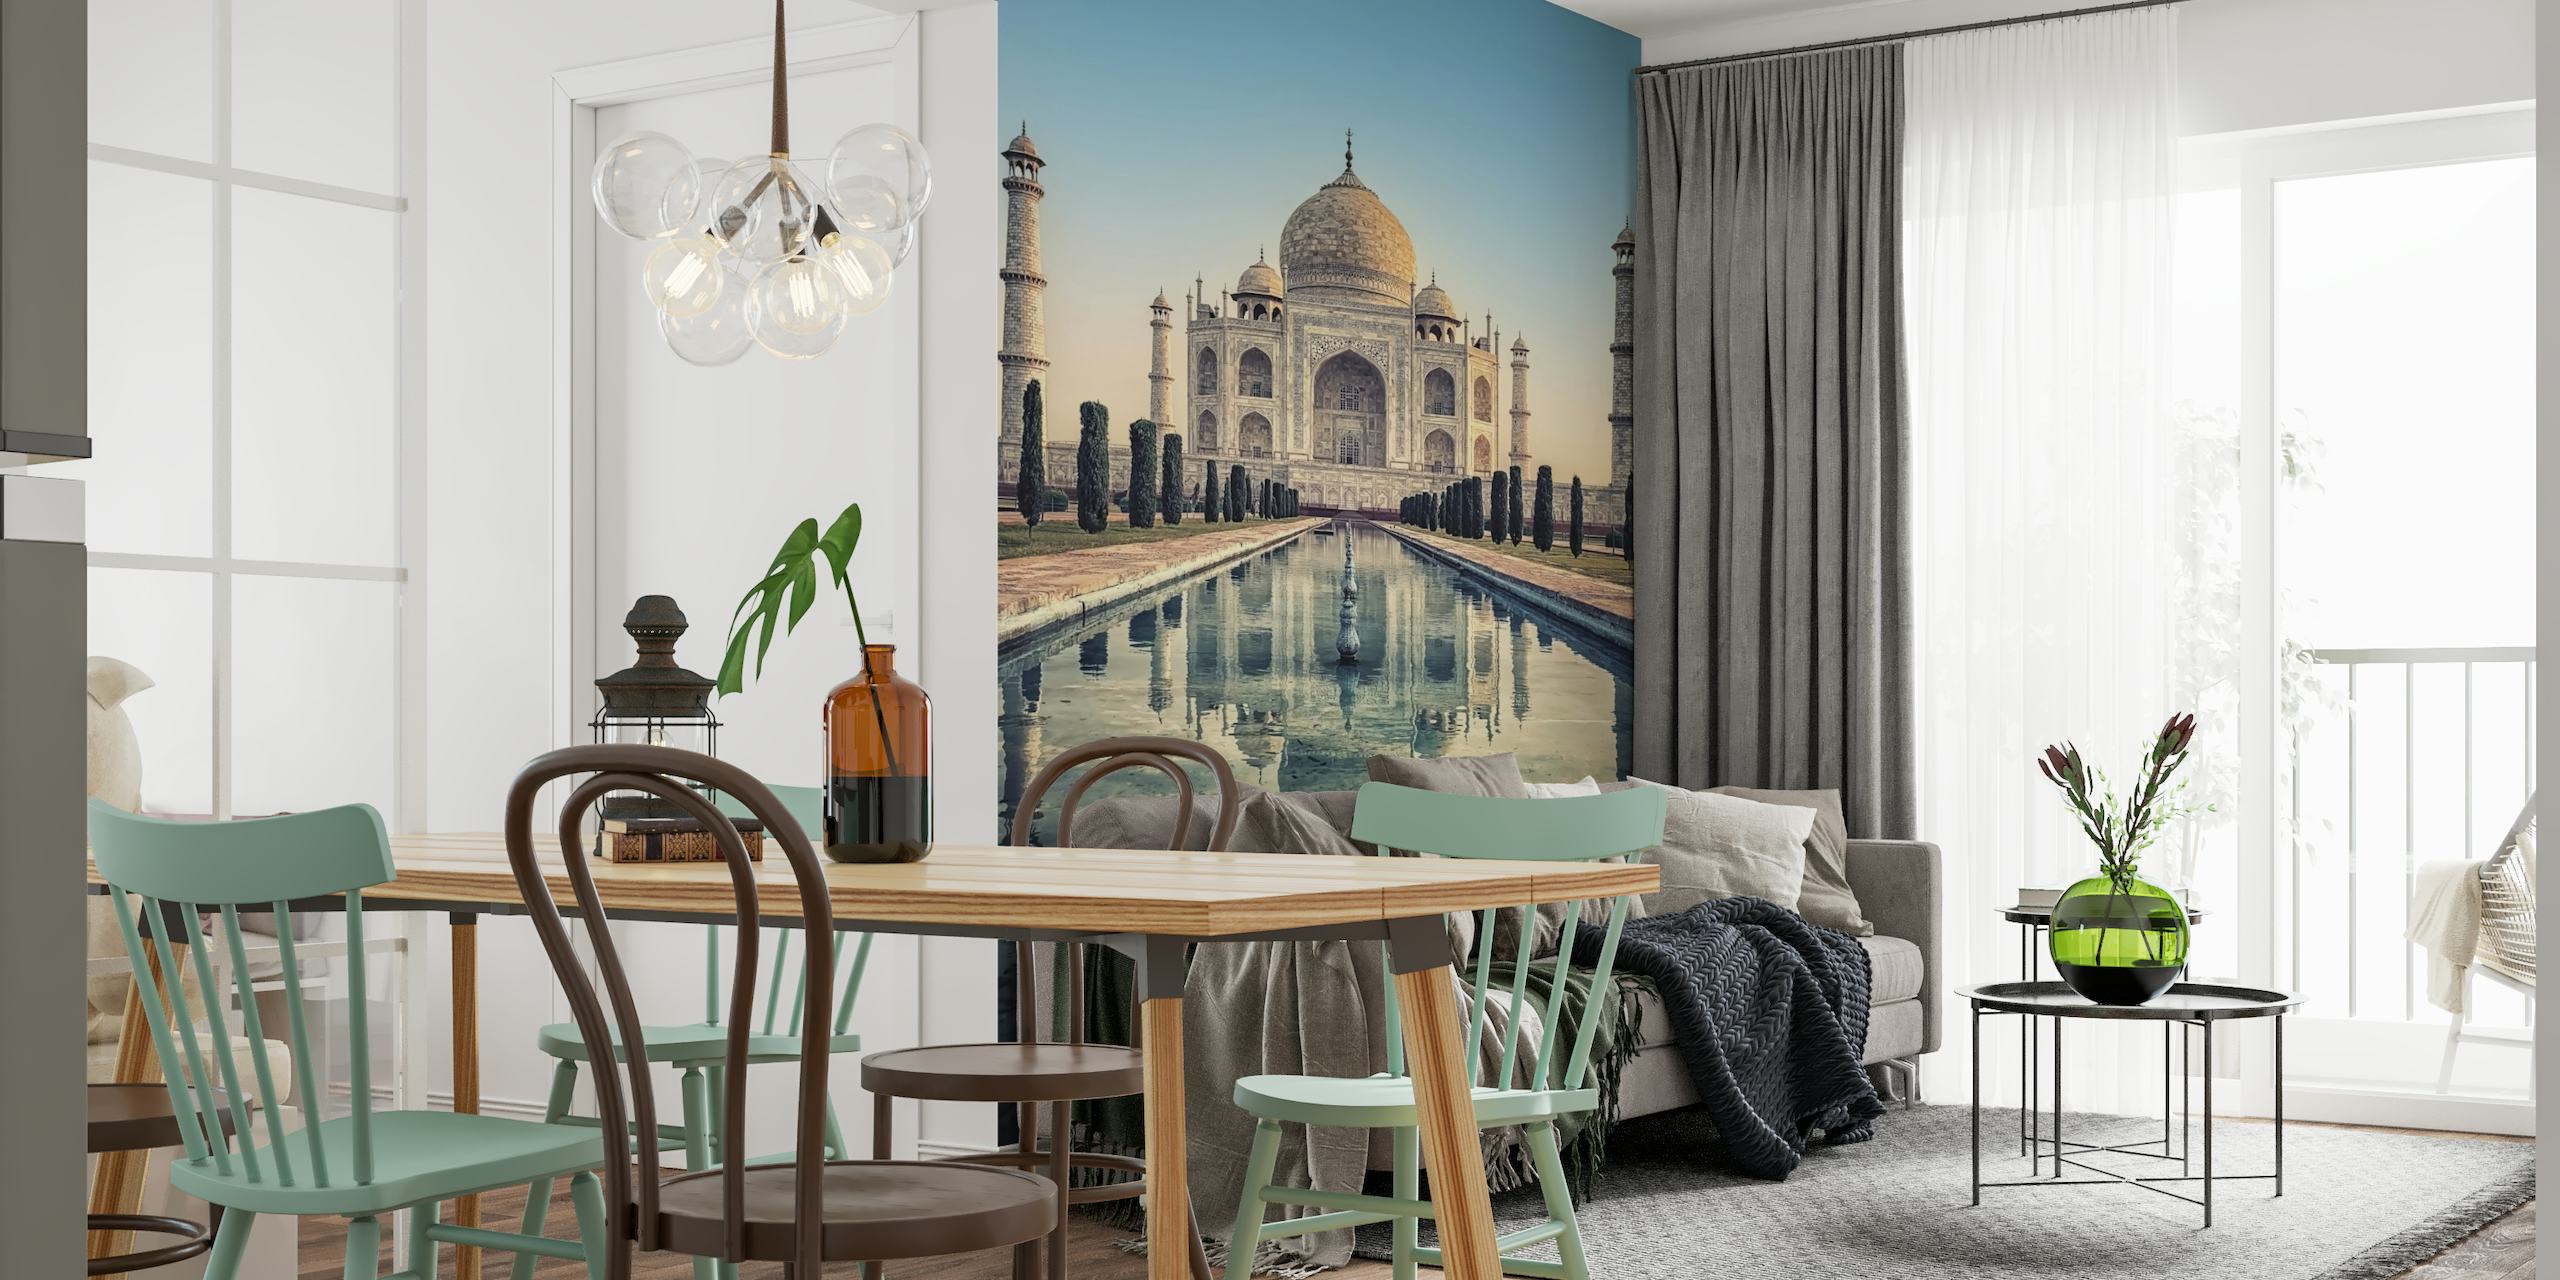 Taj Mahal Reflection behang